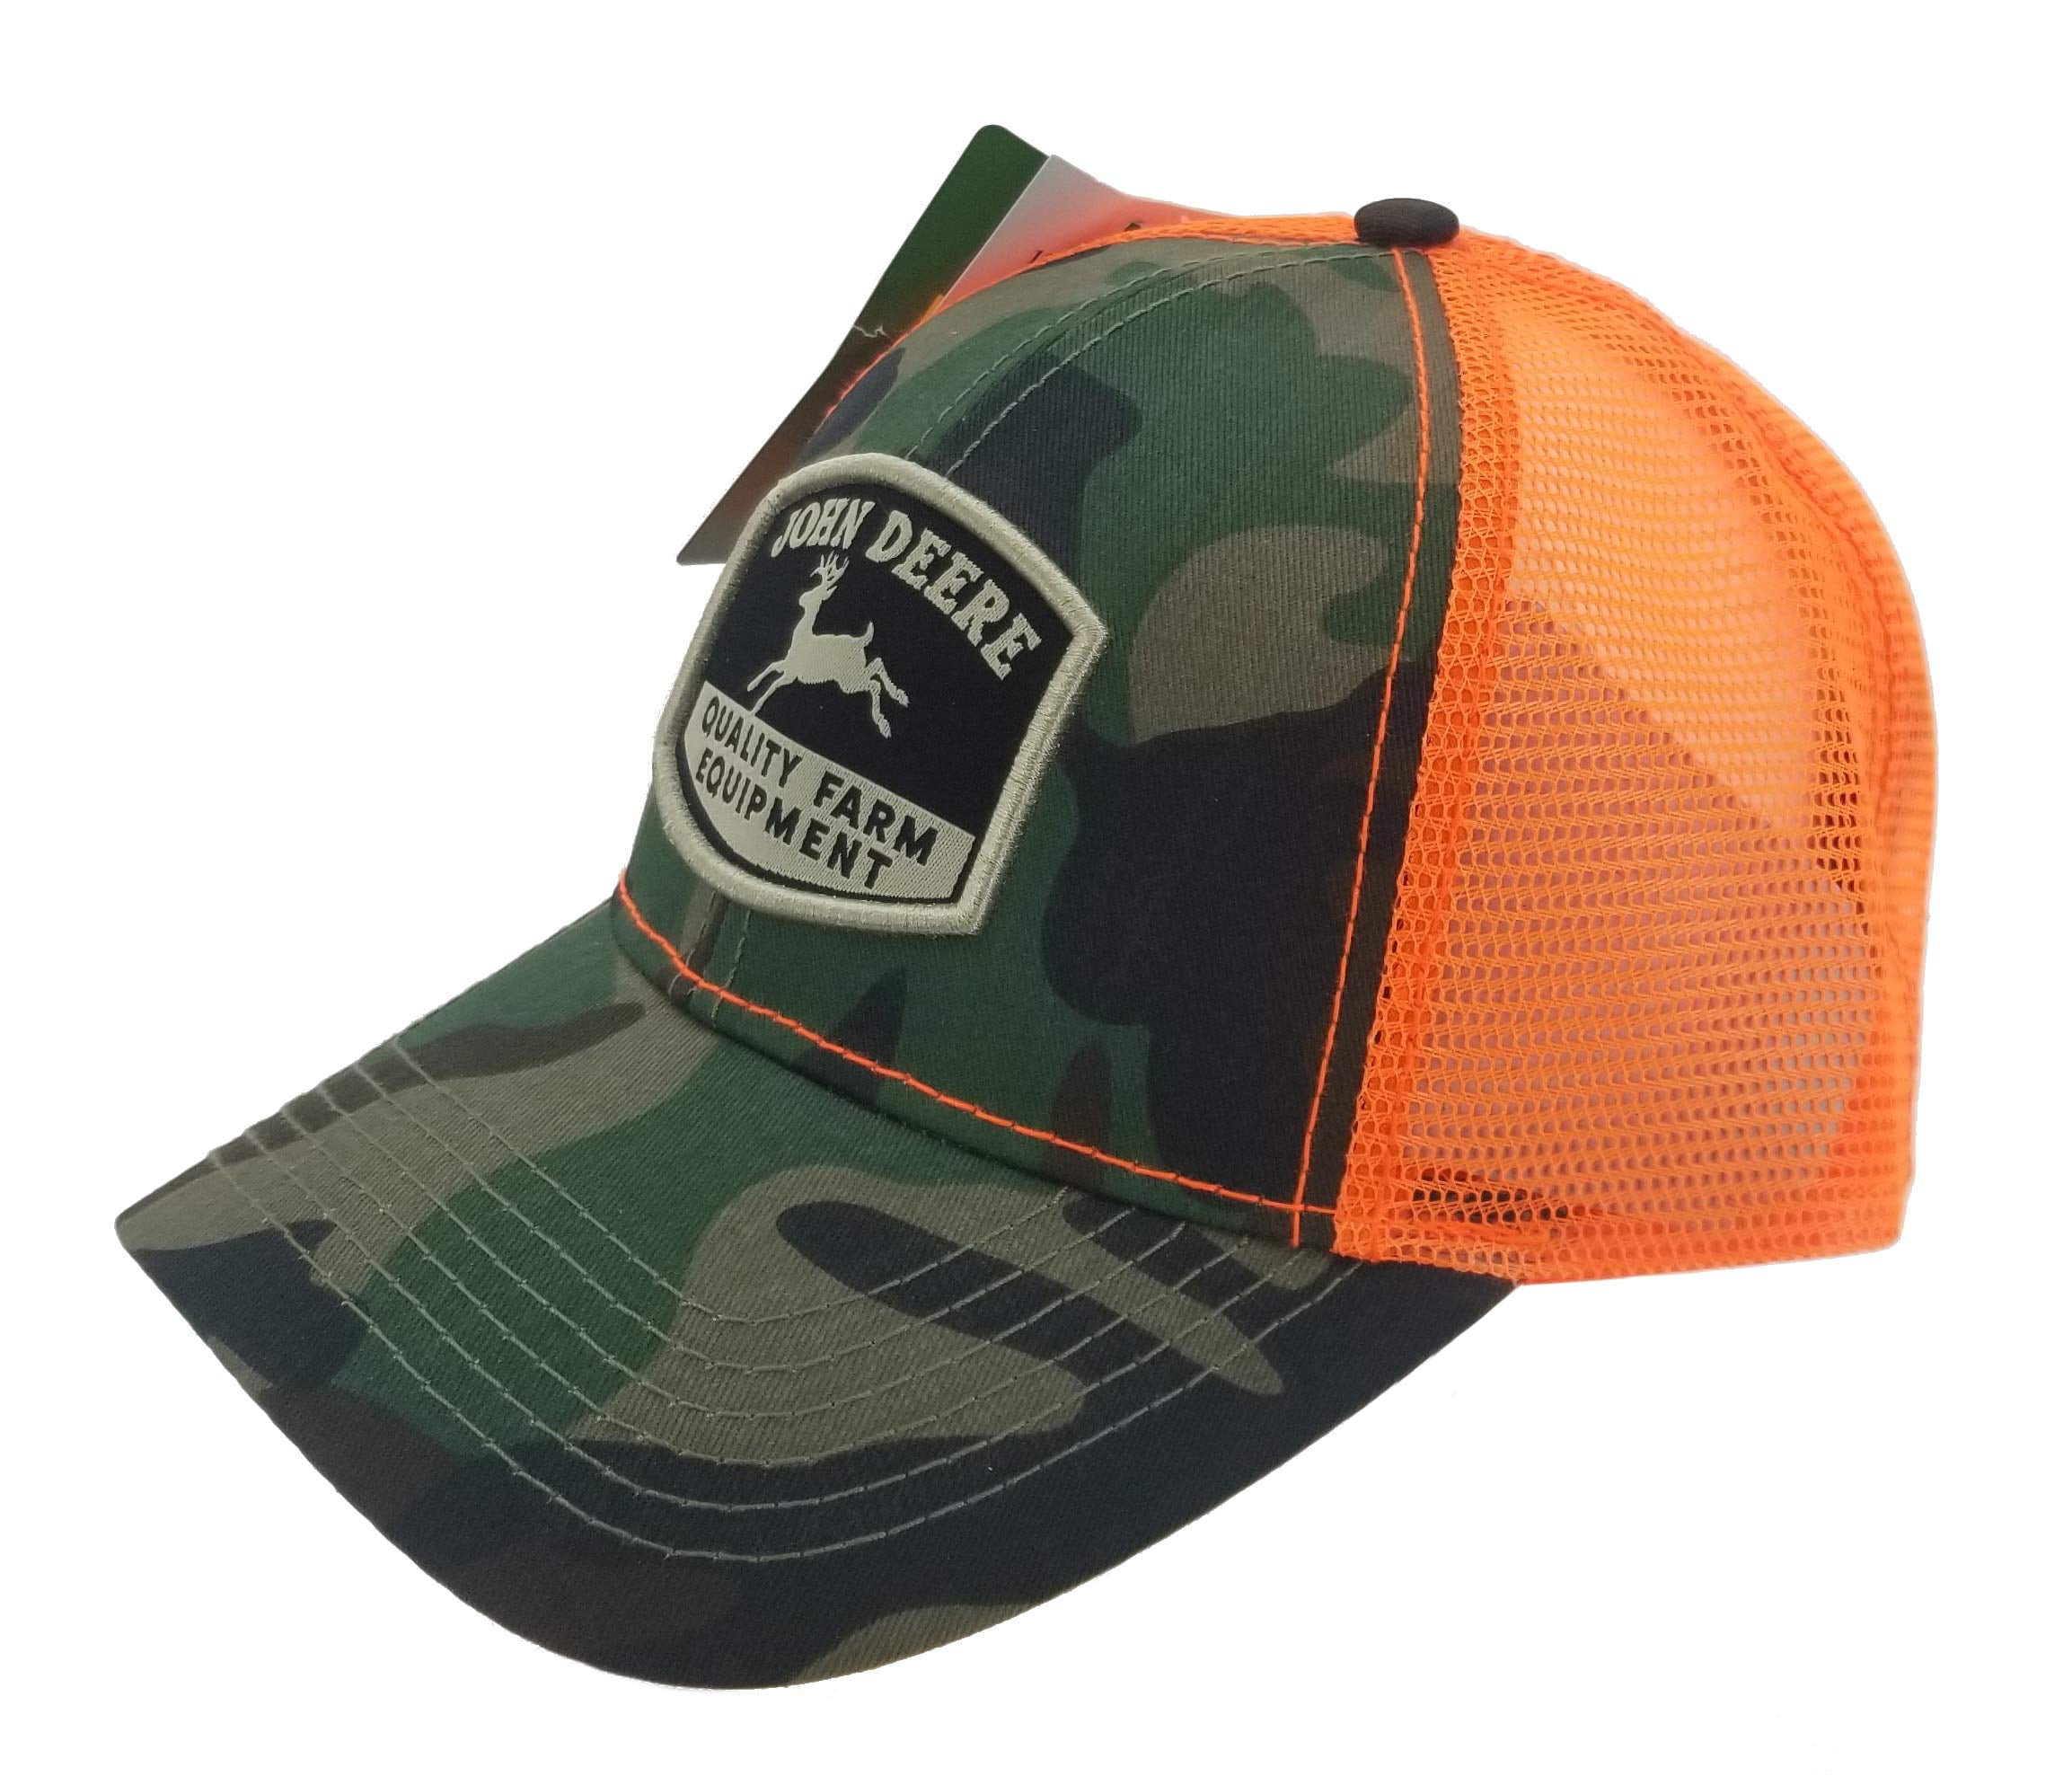 John Deere Mens' Camo/Orange Mesh Back Hat/Cap - LP73361 - Walmart.com